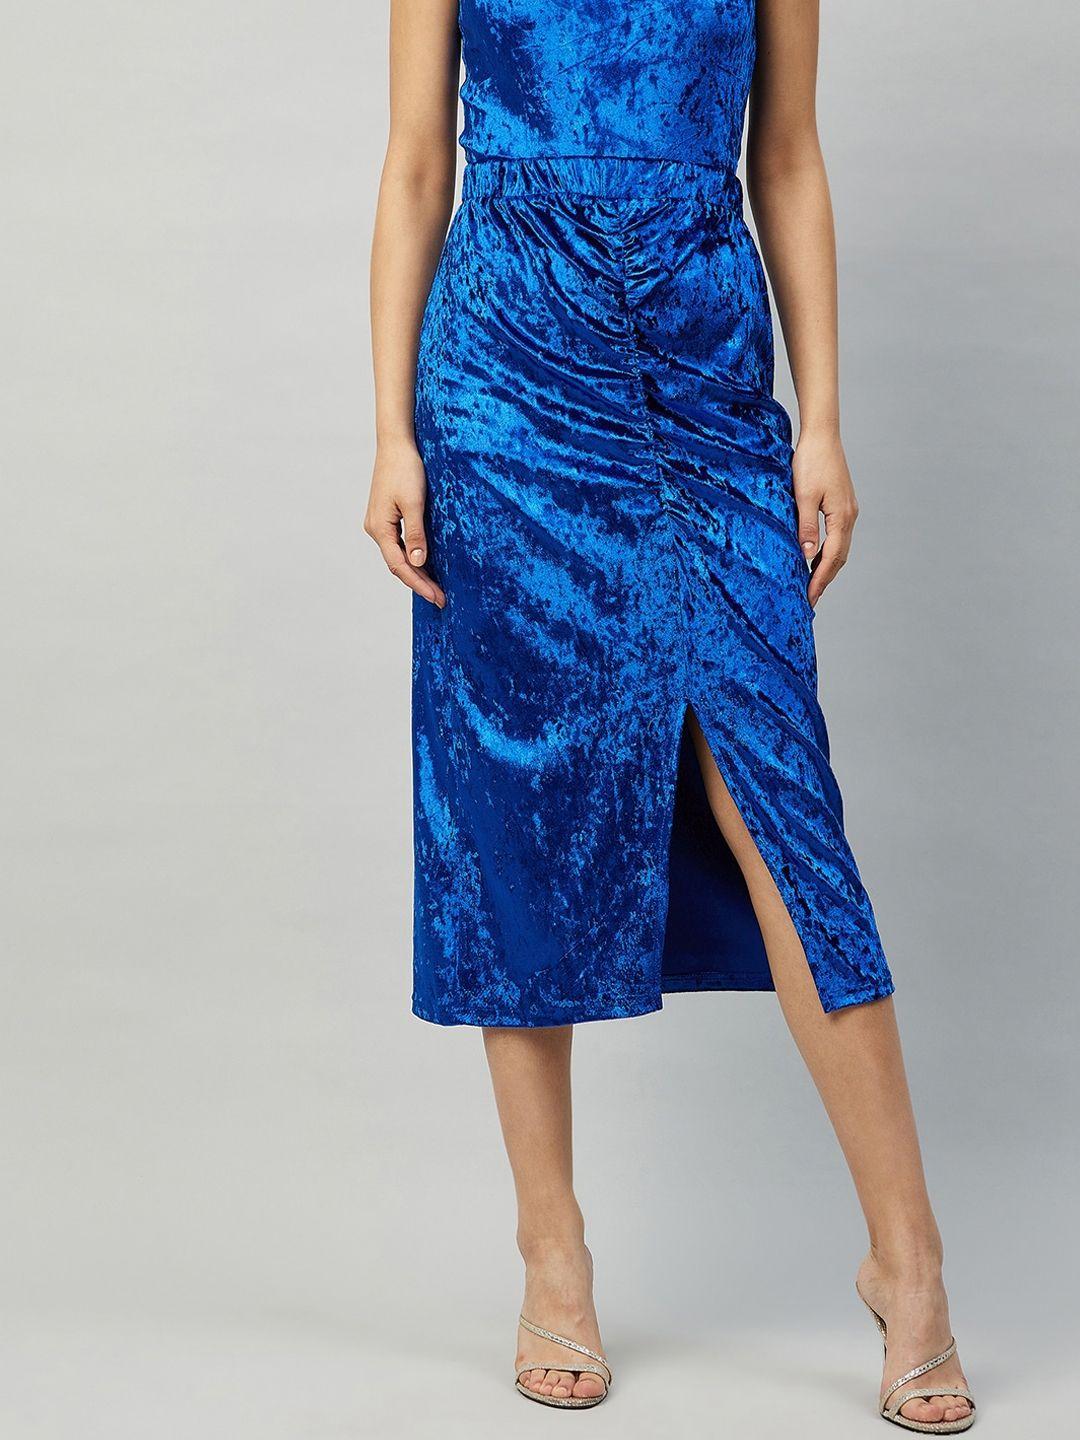 carlton london women blue solid midi pencil skirt